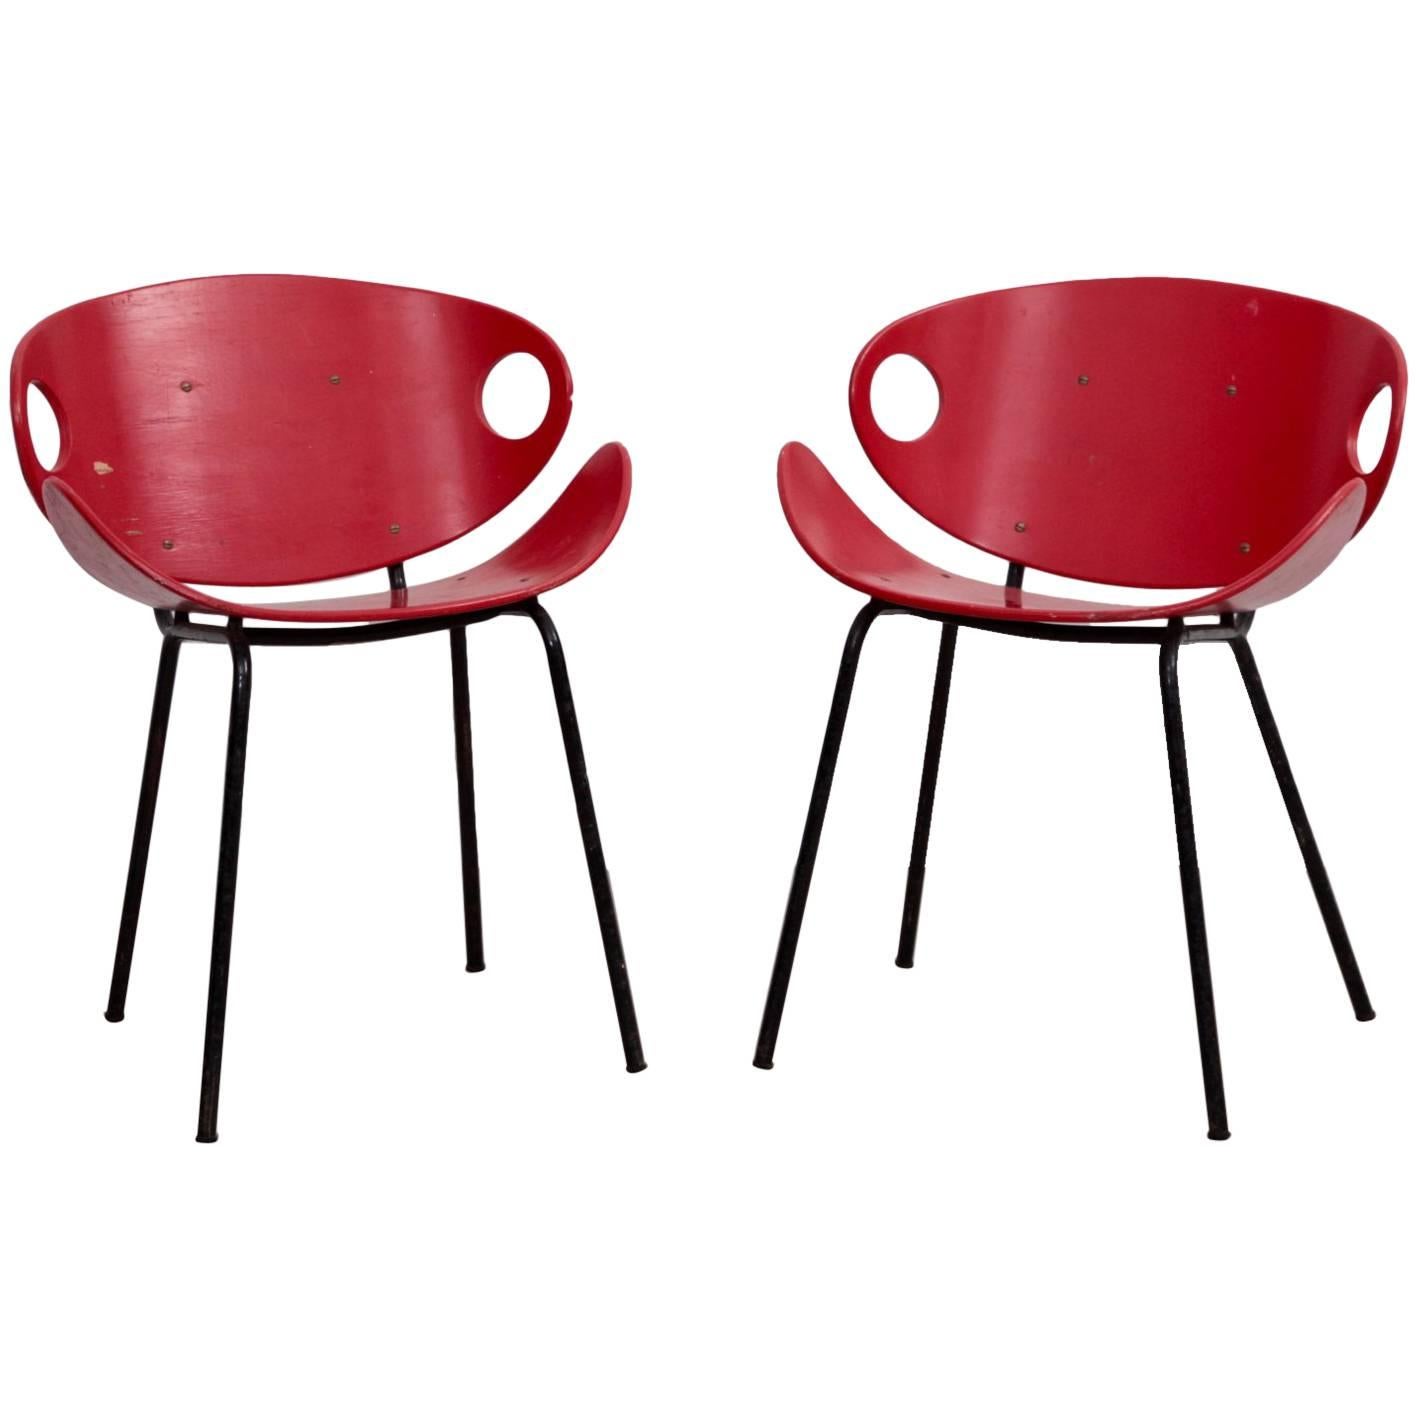 Rare Pair of Red Olof Kettunen Chairs for Merivaara, Finland, 1950s